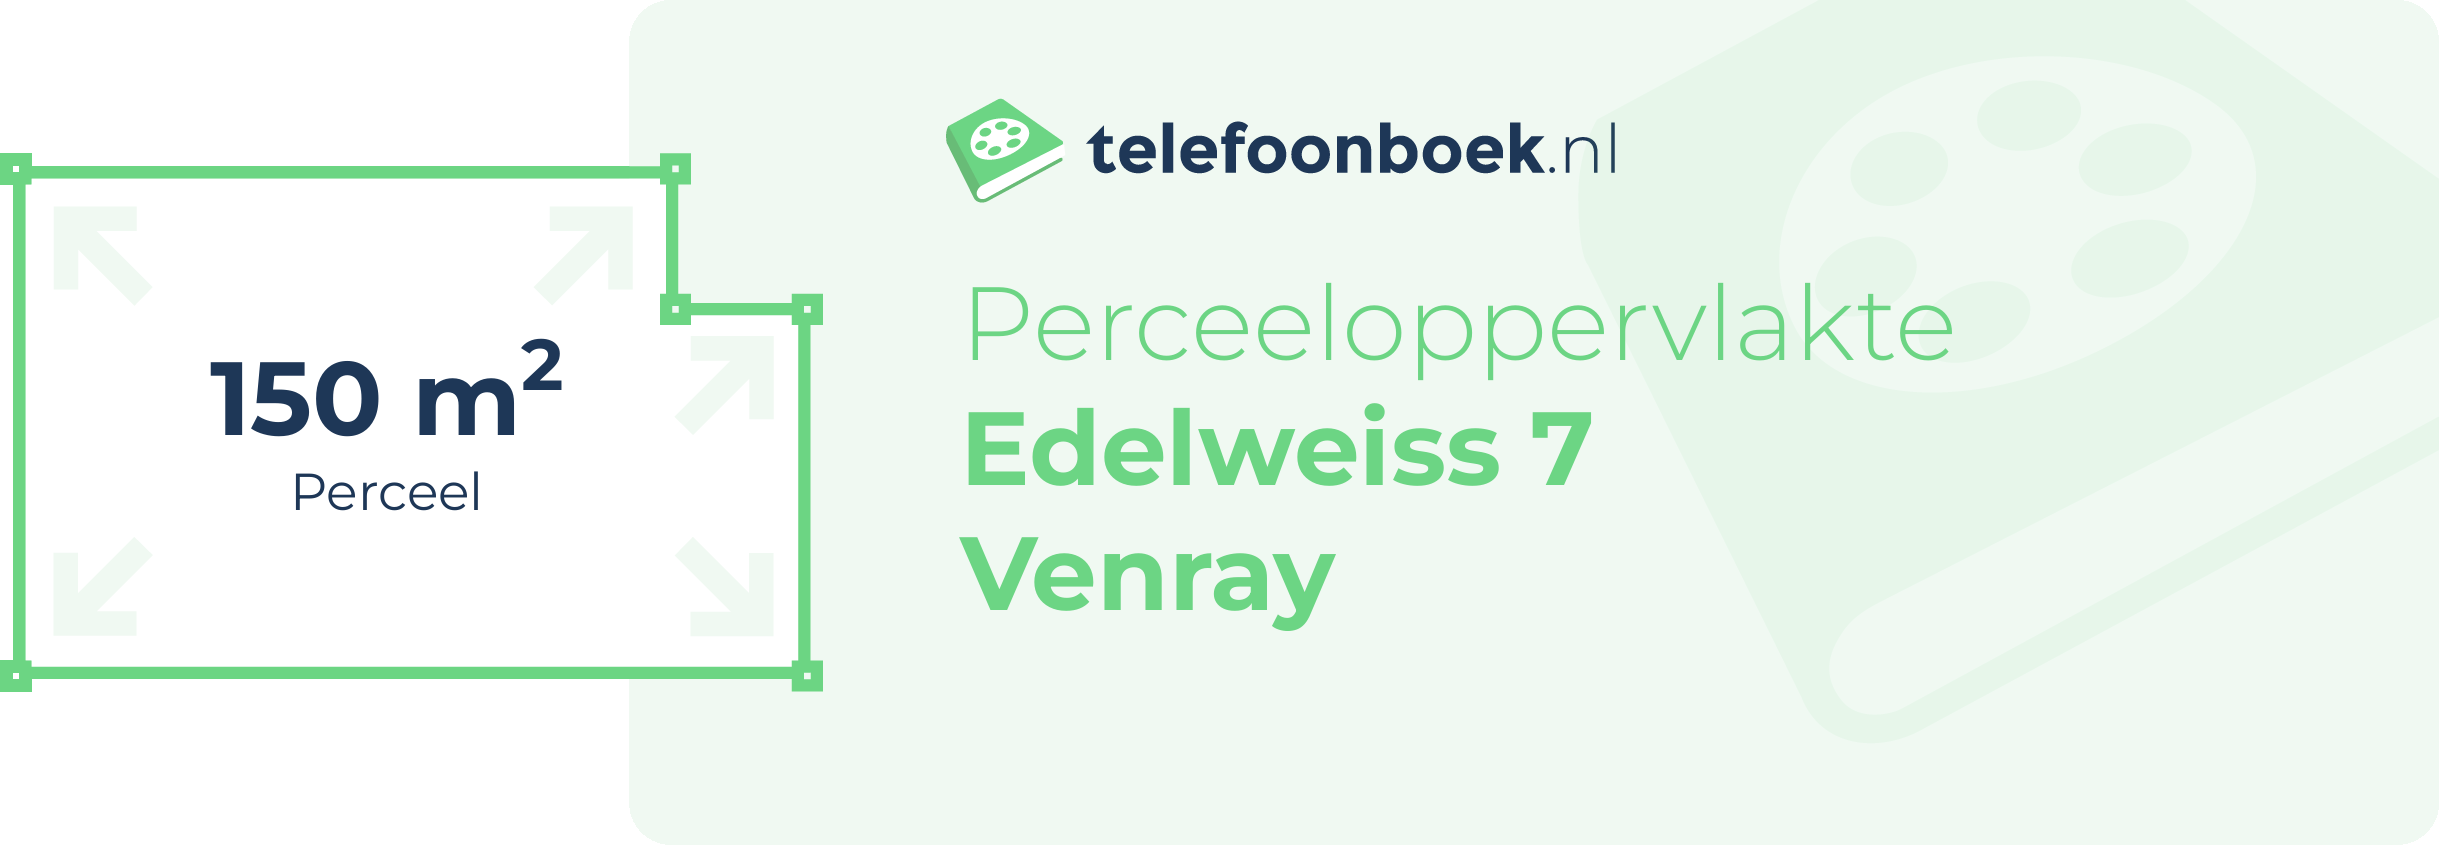 Perceeloppervlakte Edelweiss 7 Venray